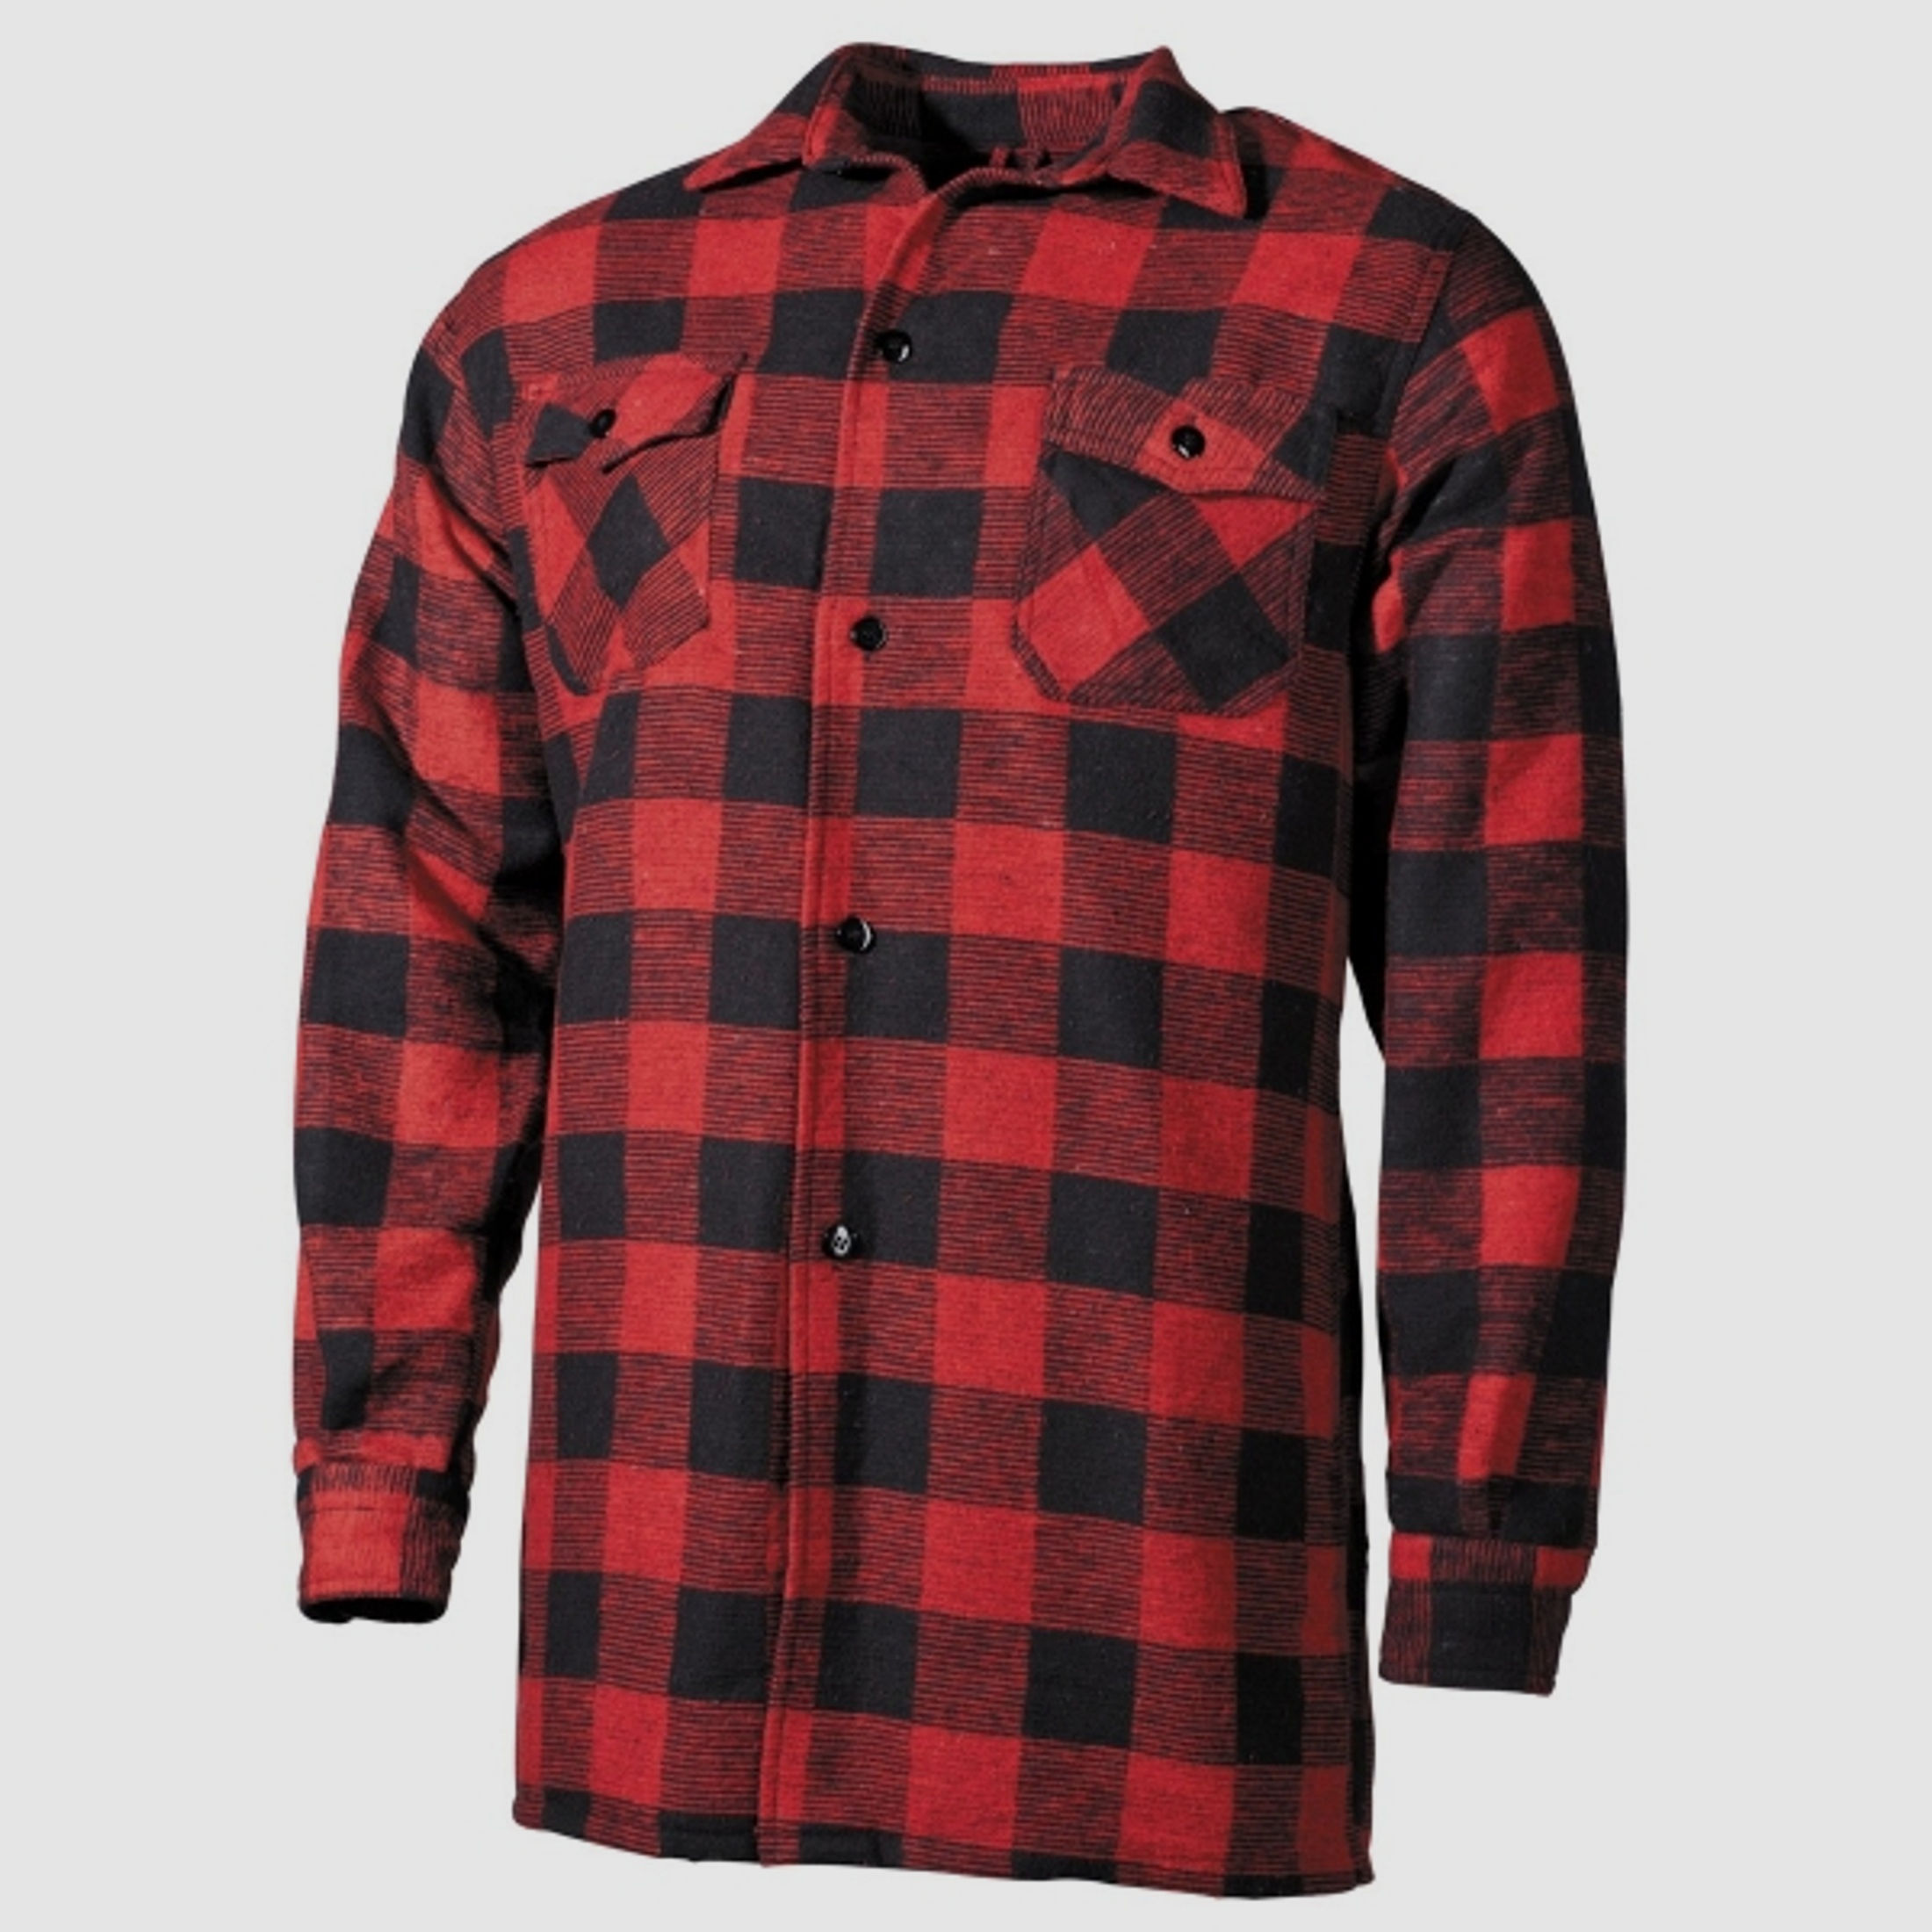 Holzfällerhemd Gr. M (Medium) Rot - Schwarz / Karohemd Flanellhemd